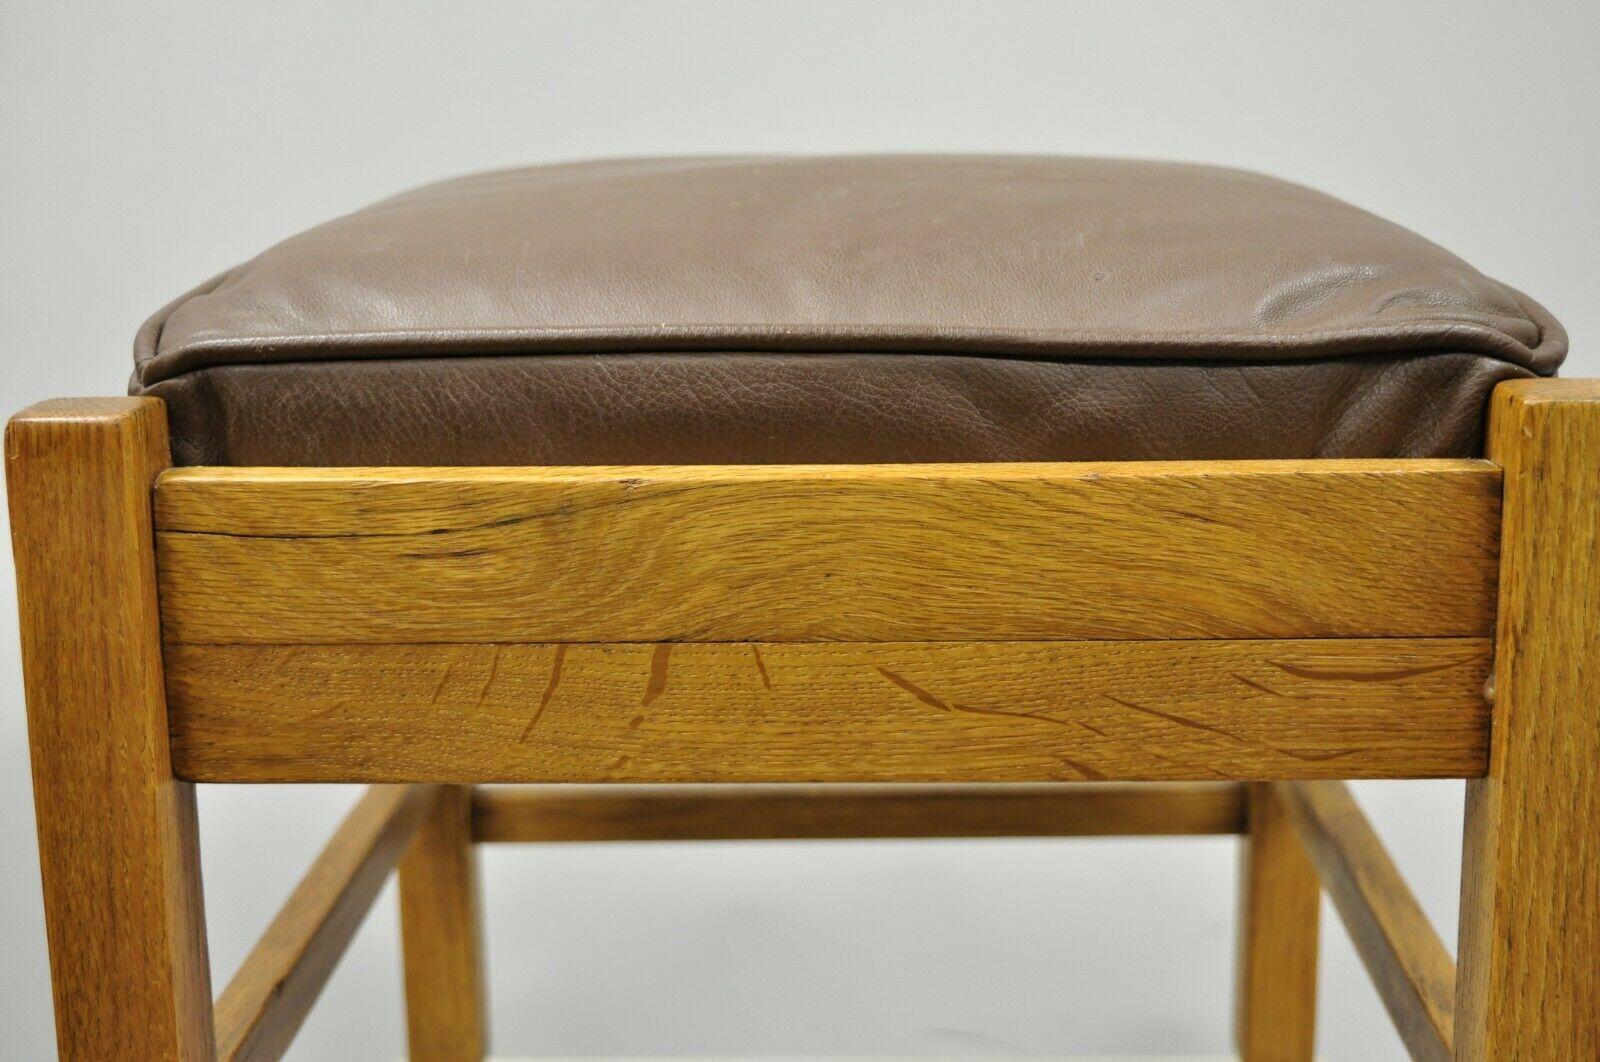 American Lifetime Furniture 403 Mission Oak Arts & Crafts Leather Ottoman Stool Footstool For Sale